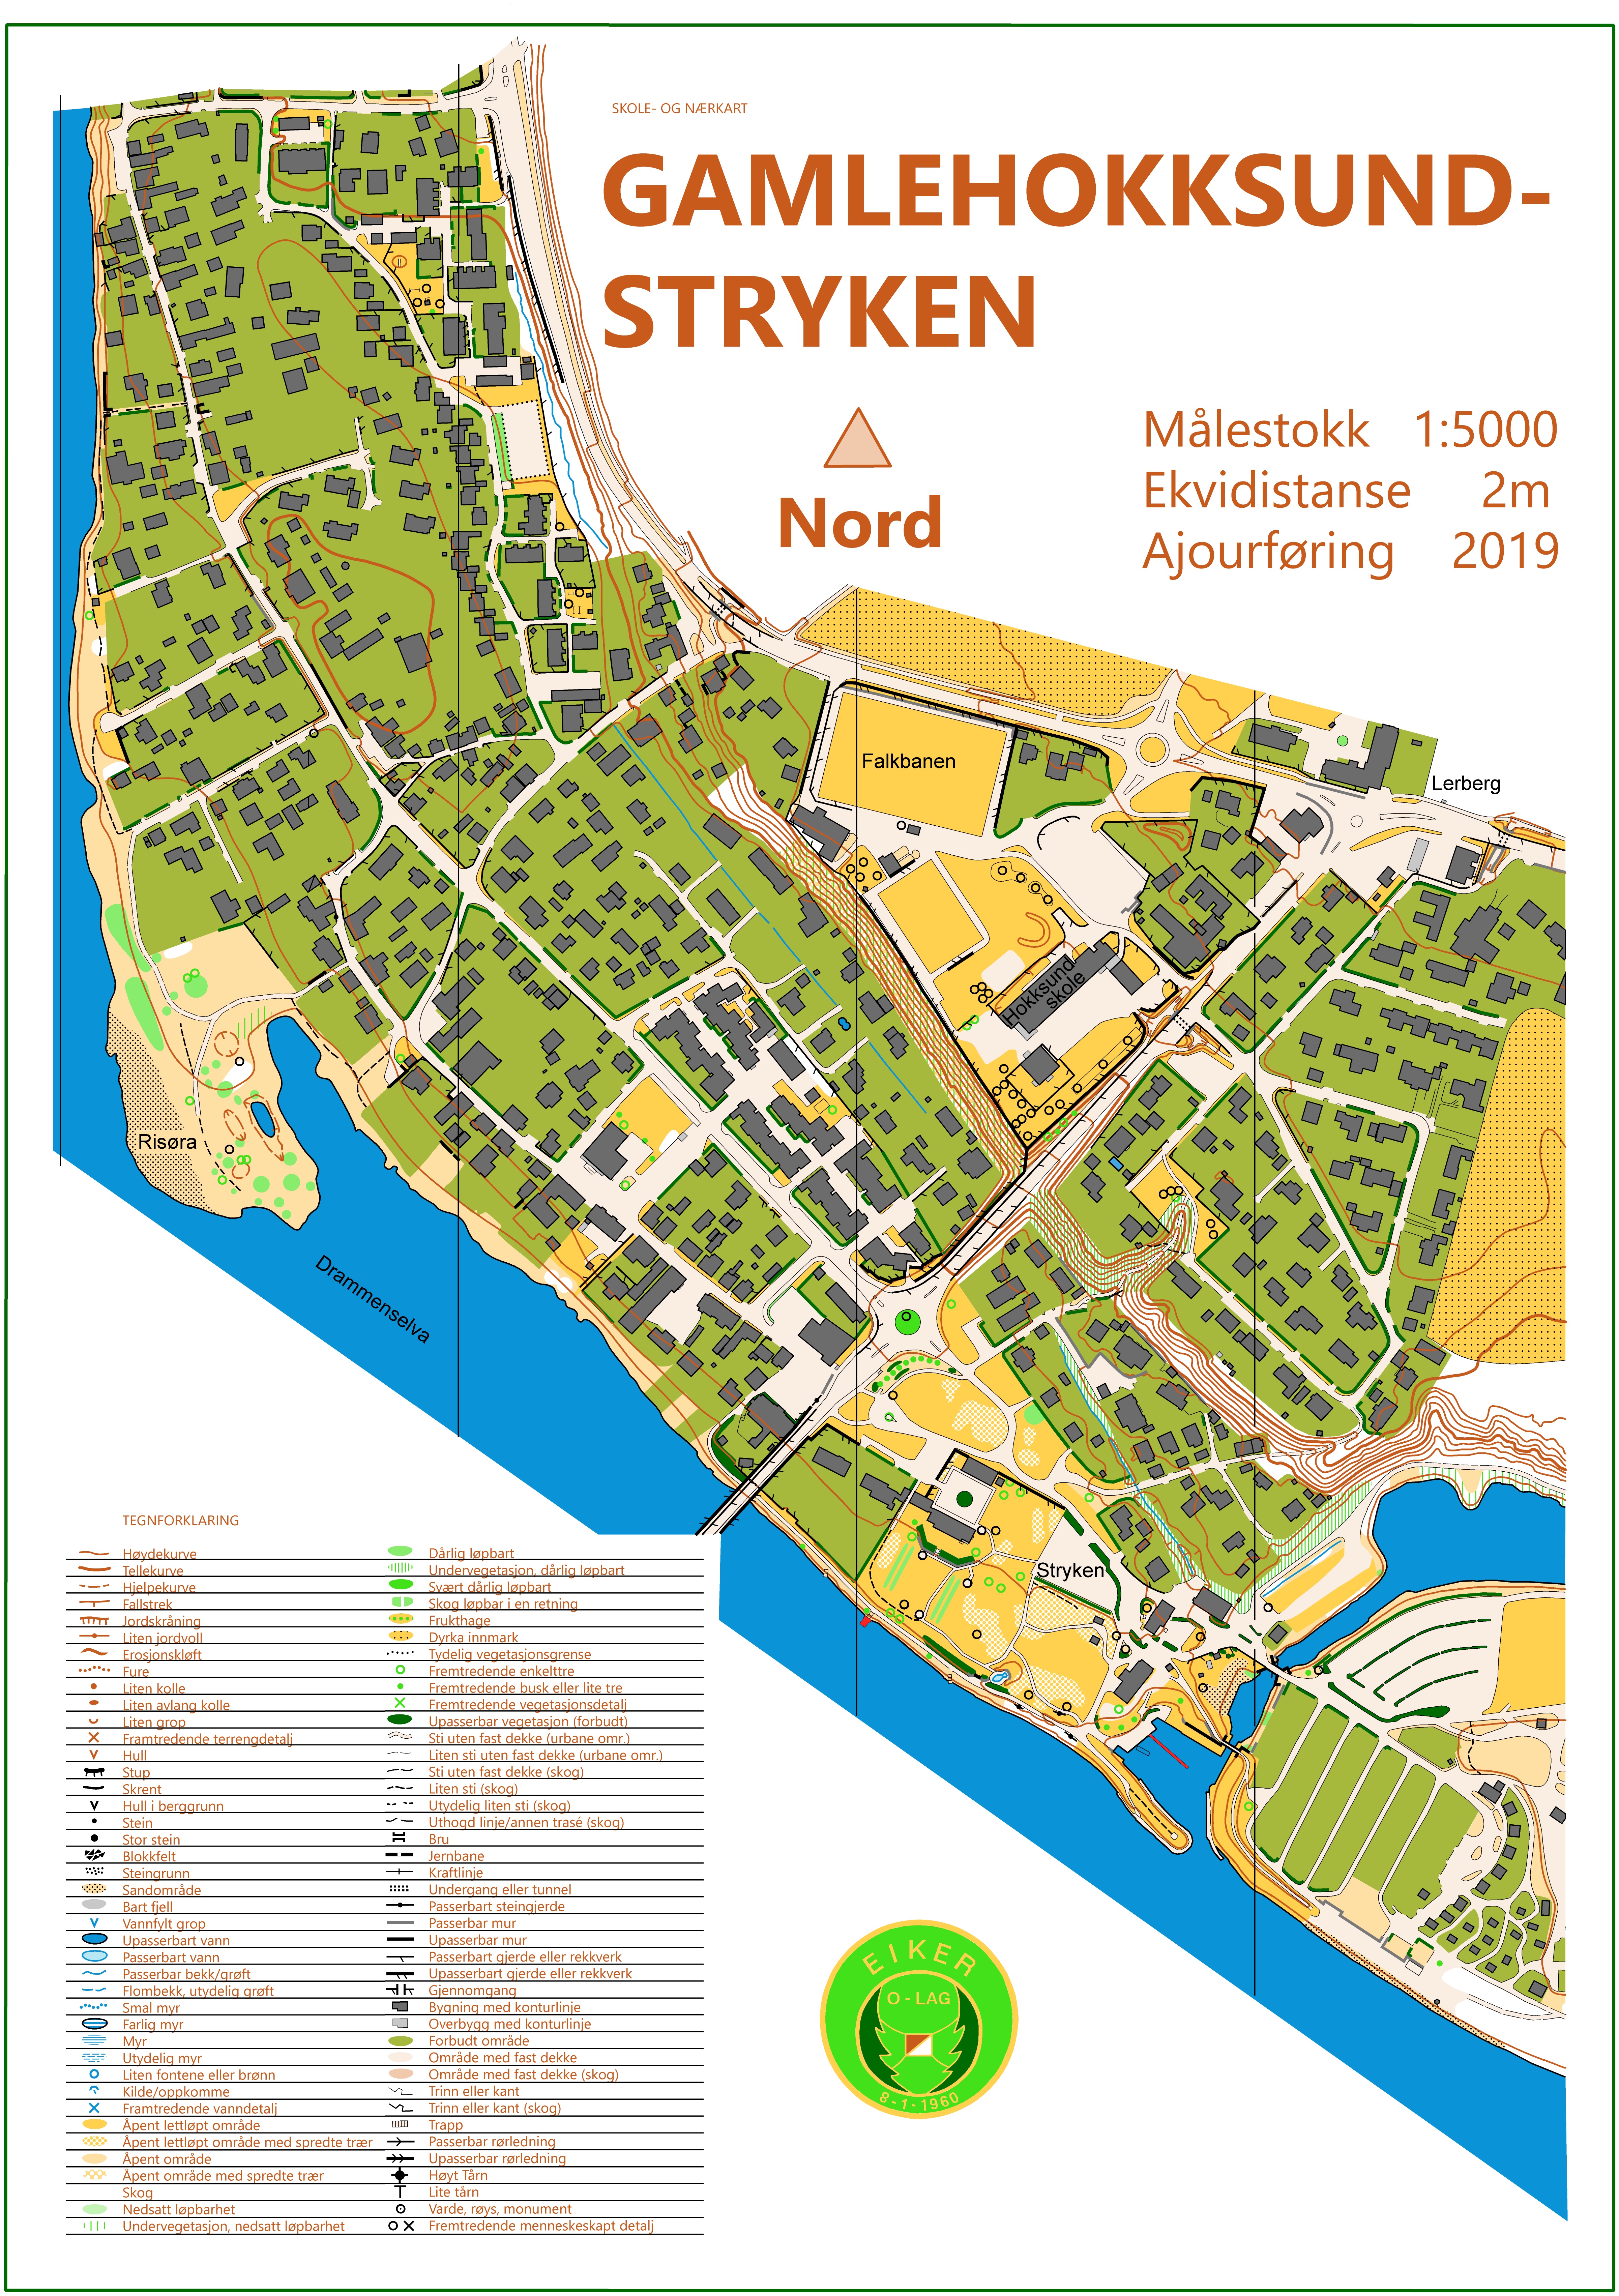 GamleHokksund-Stryken sprint (01/01/2019)